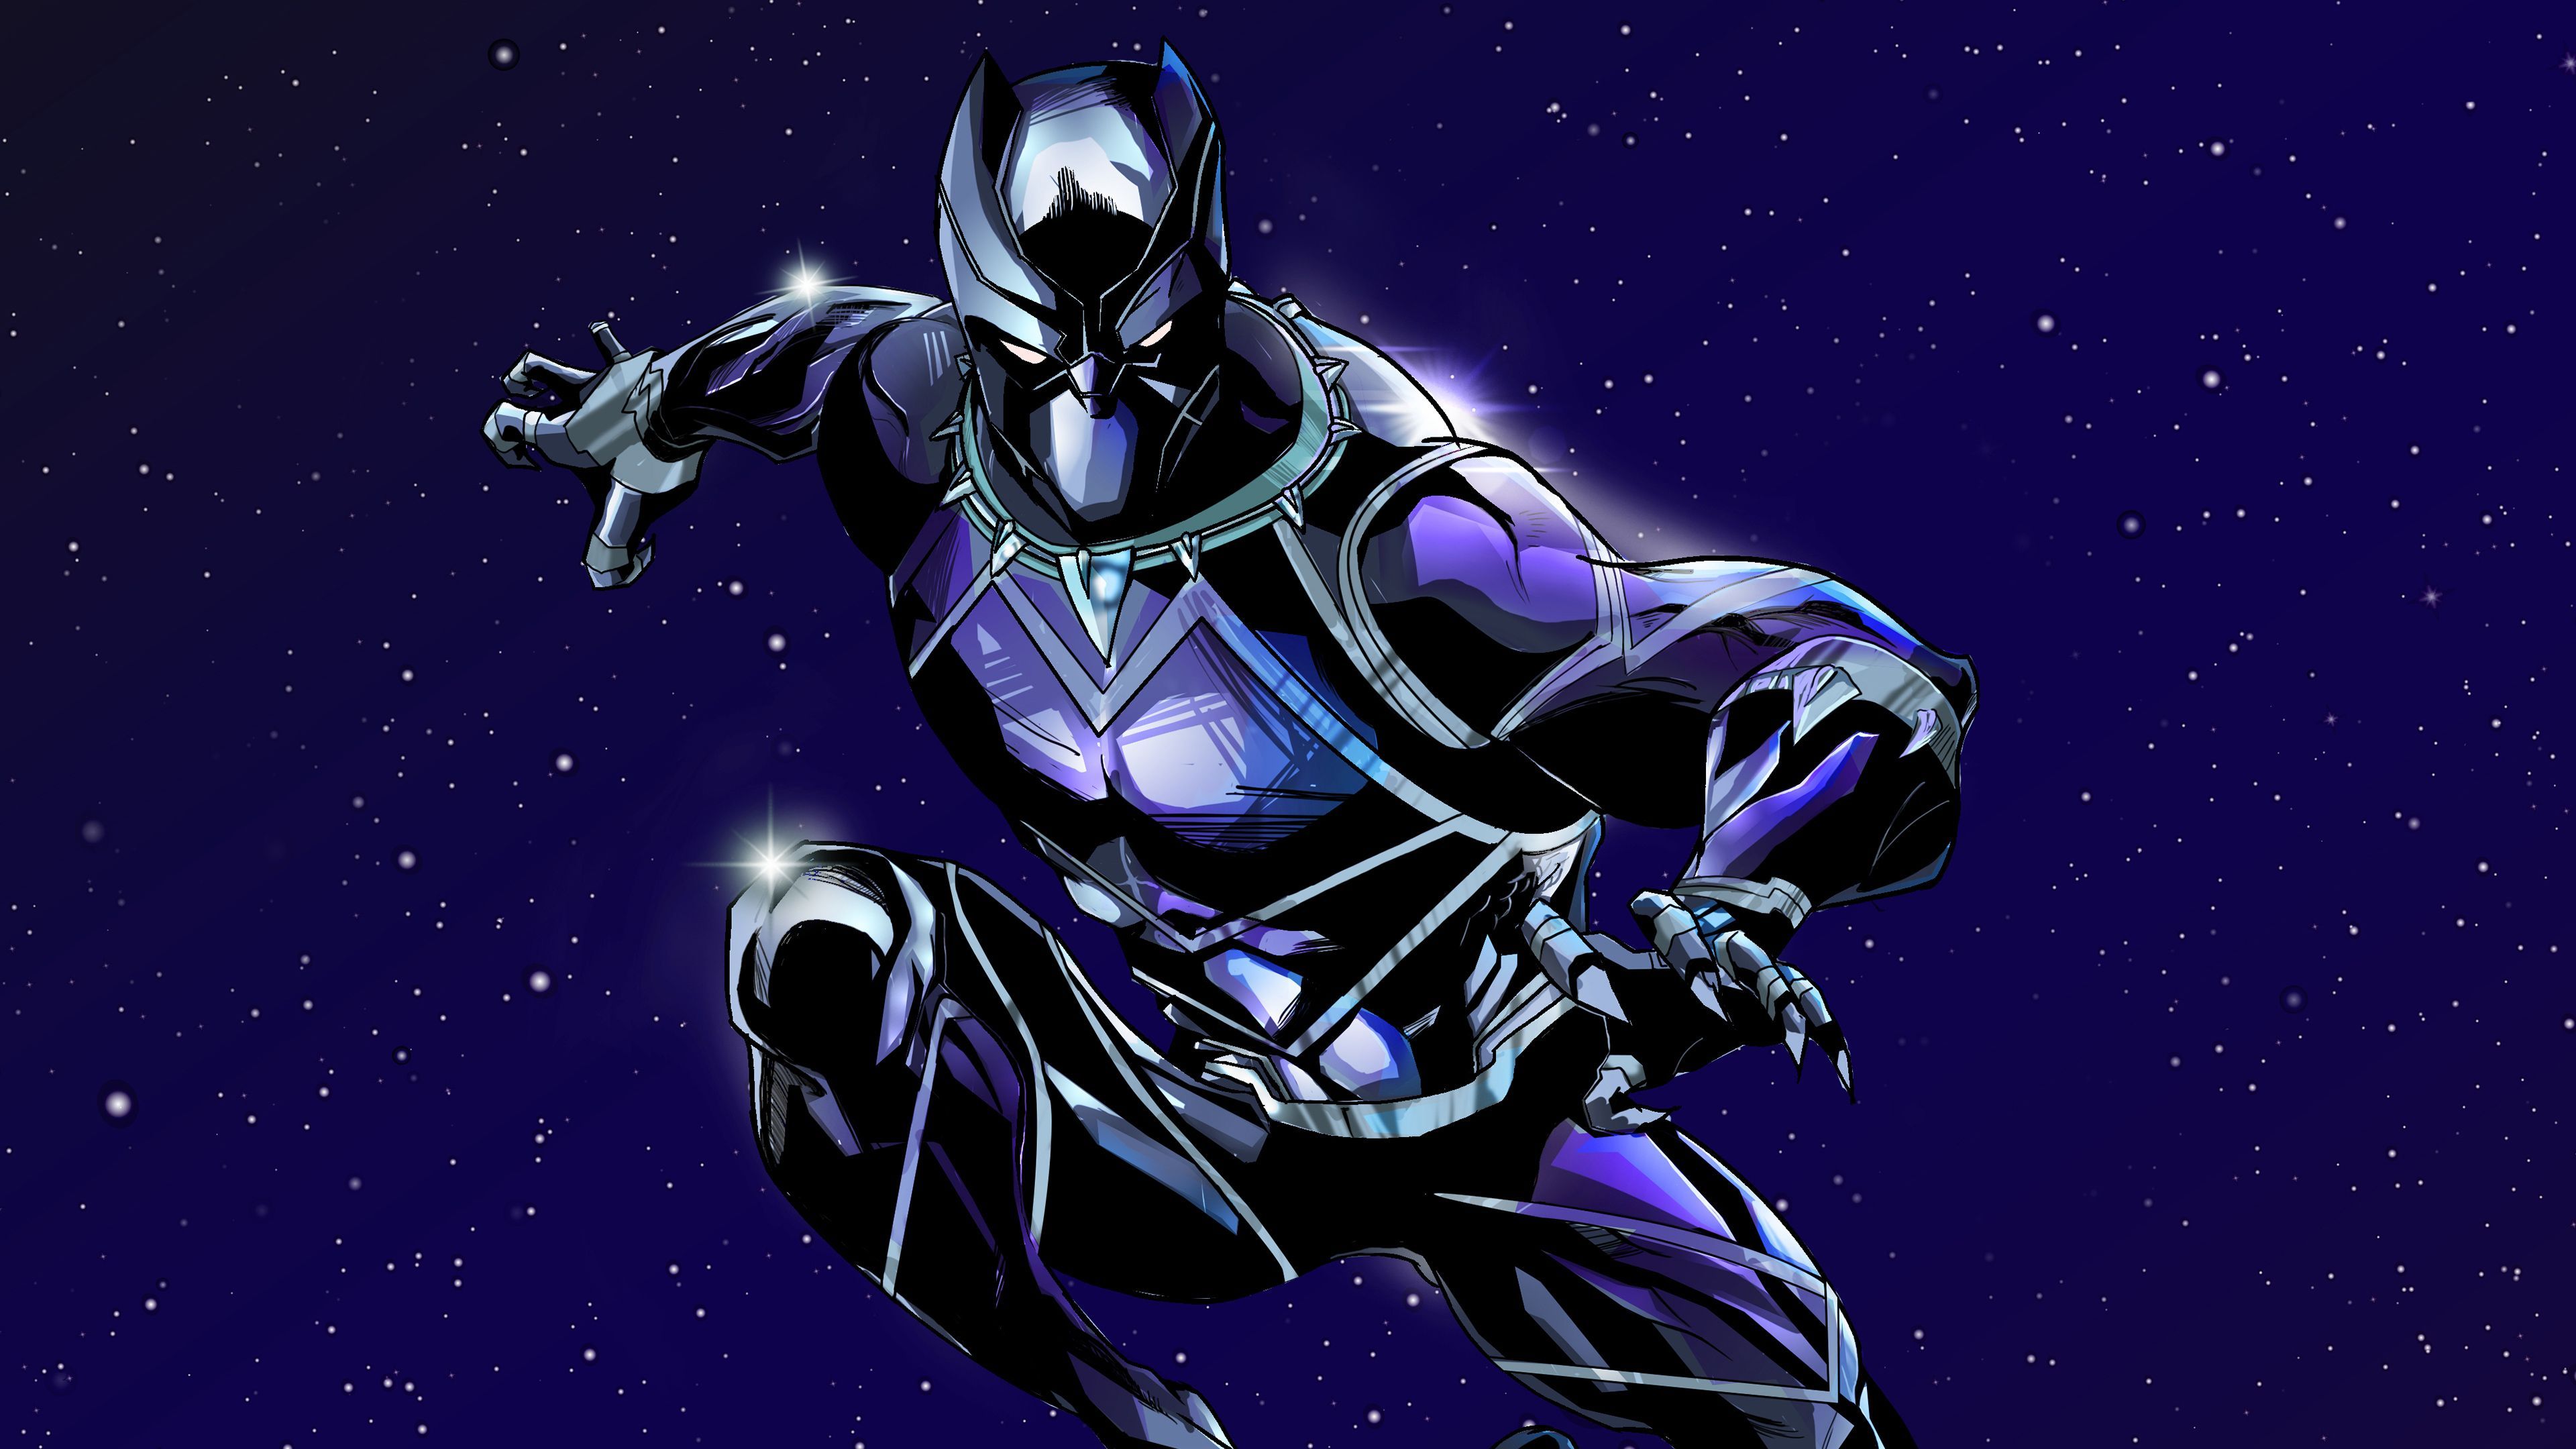 Black Panther 4k New Artwork Superheroes Wallpaper, Hd Wallpaper, Digital Art Wallpaper, Black Pan. Superhero Wallpaper, Avengers Wallpaper, Superhero Painting